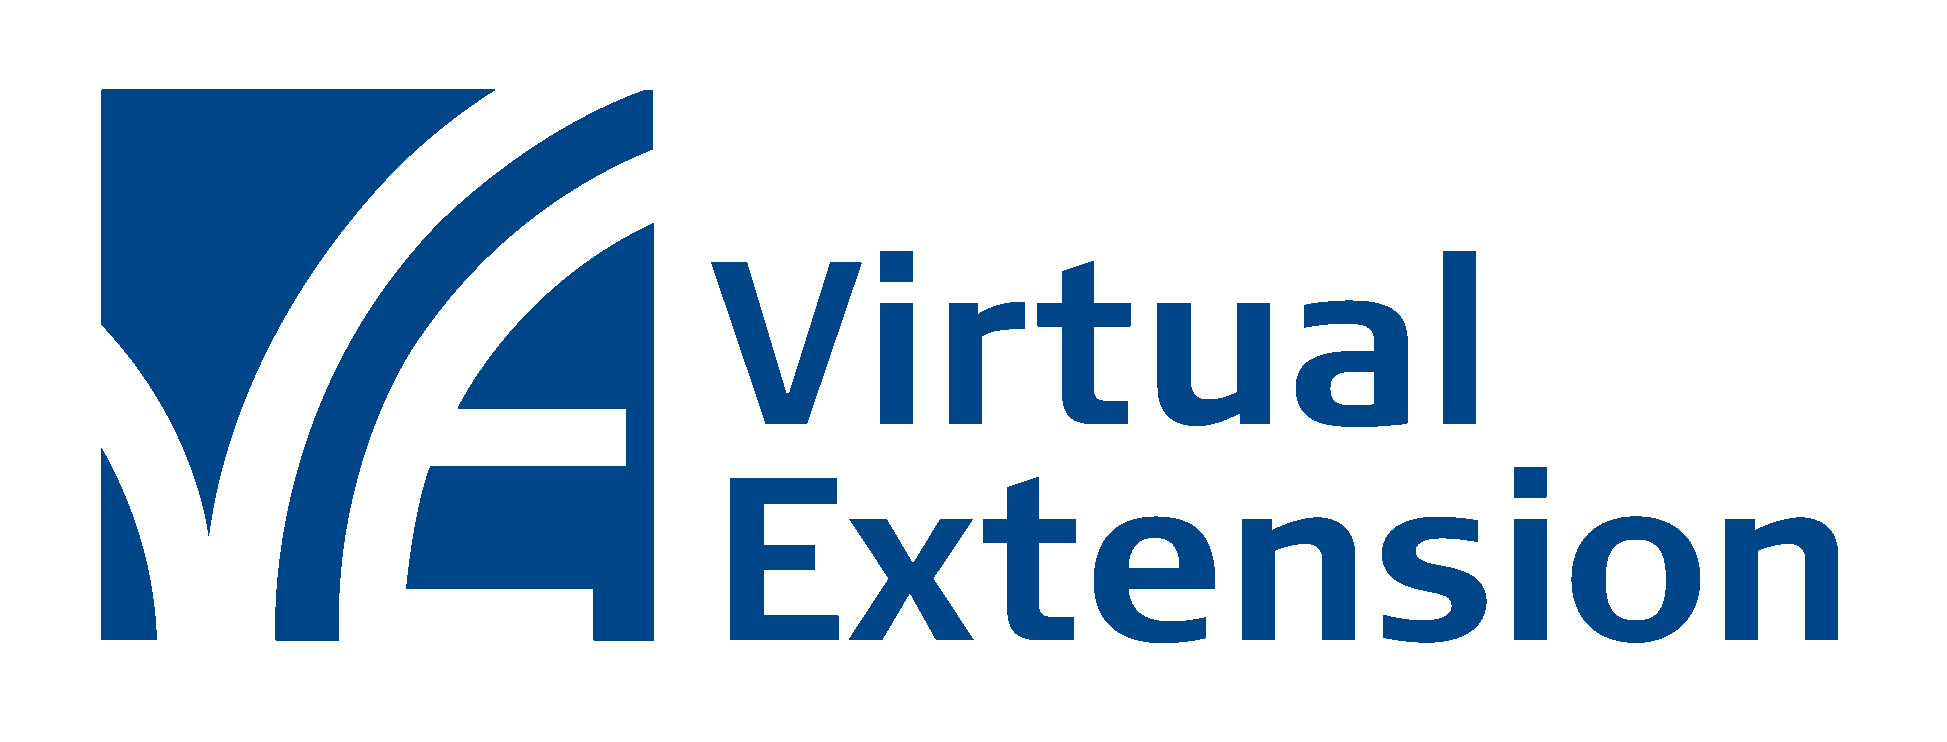 Virtual Extension logo